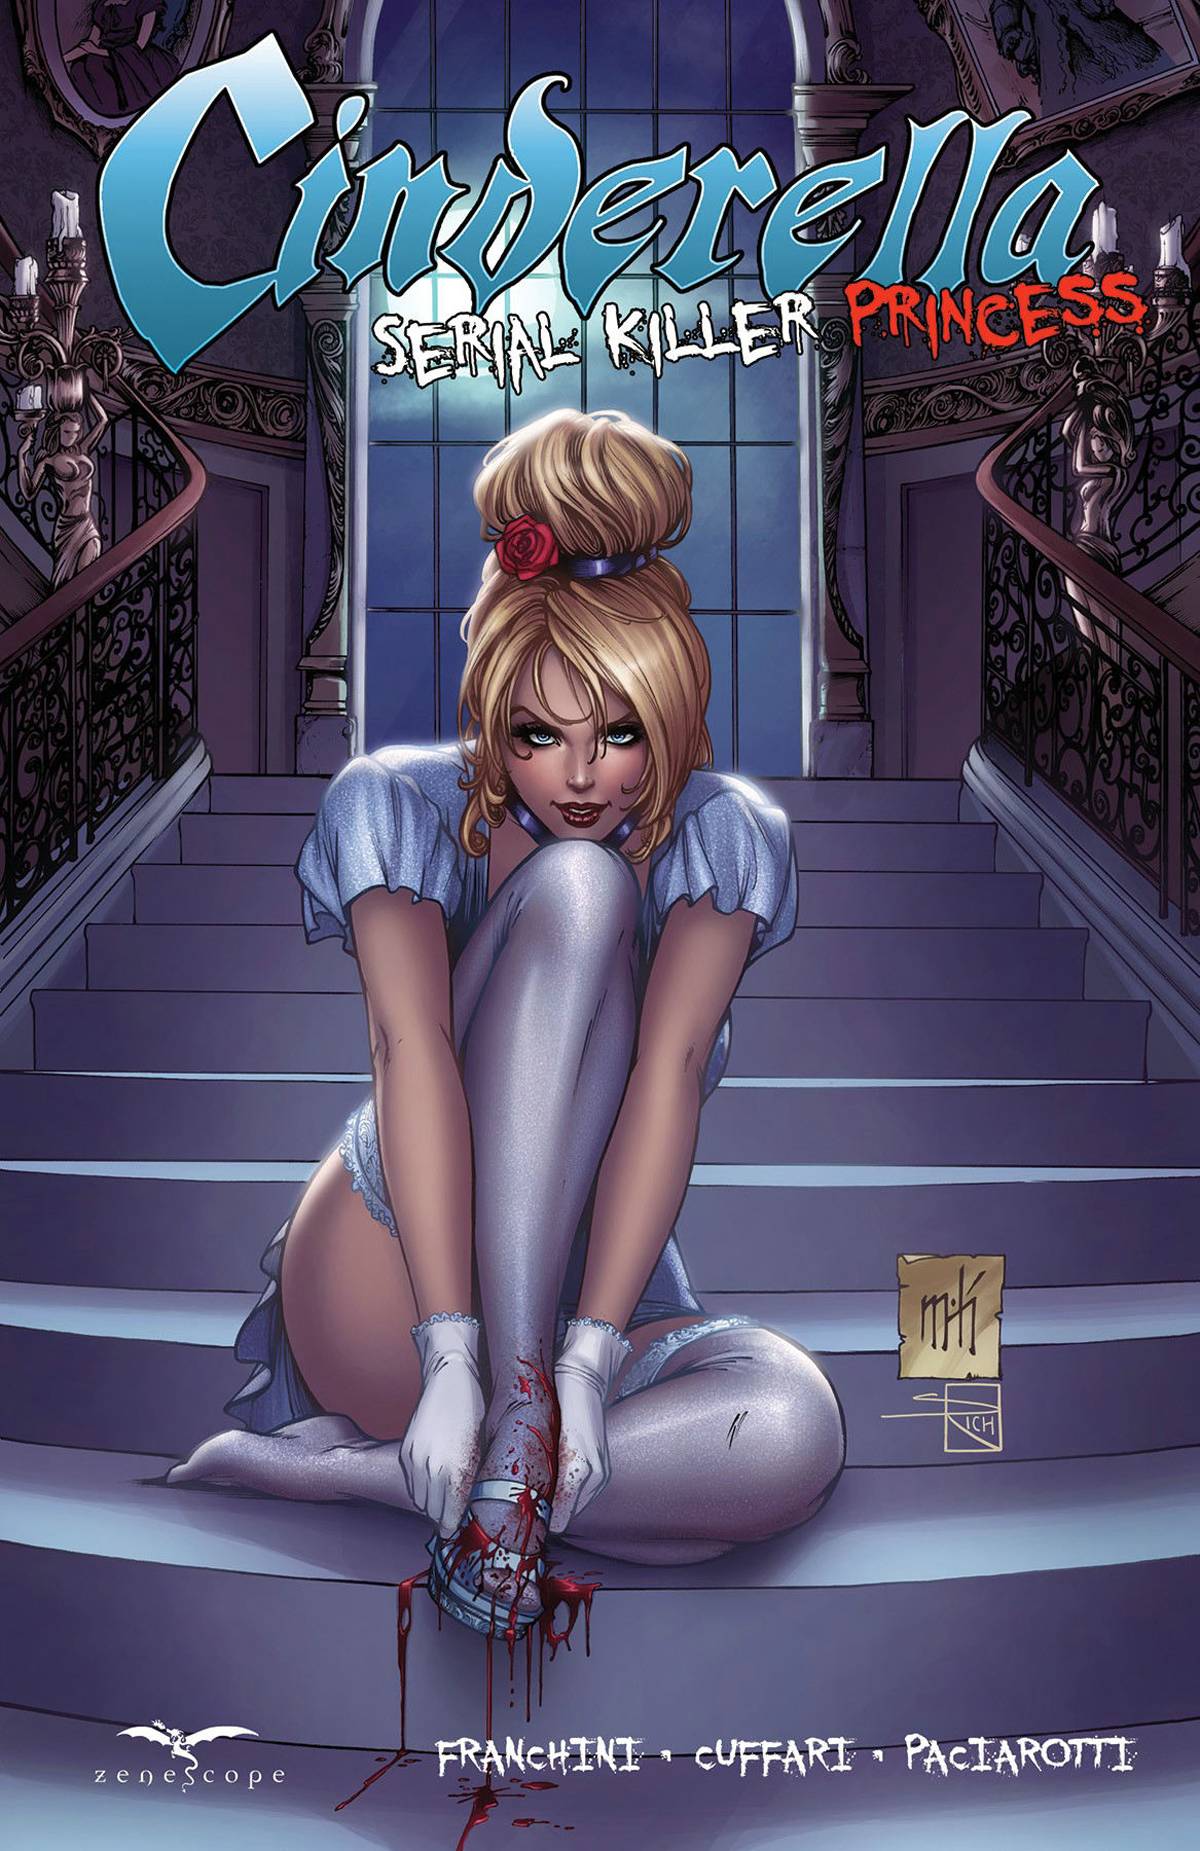 Cinderella Serial Killer Princess Graphic Novel